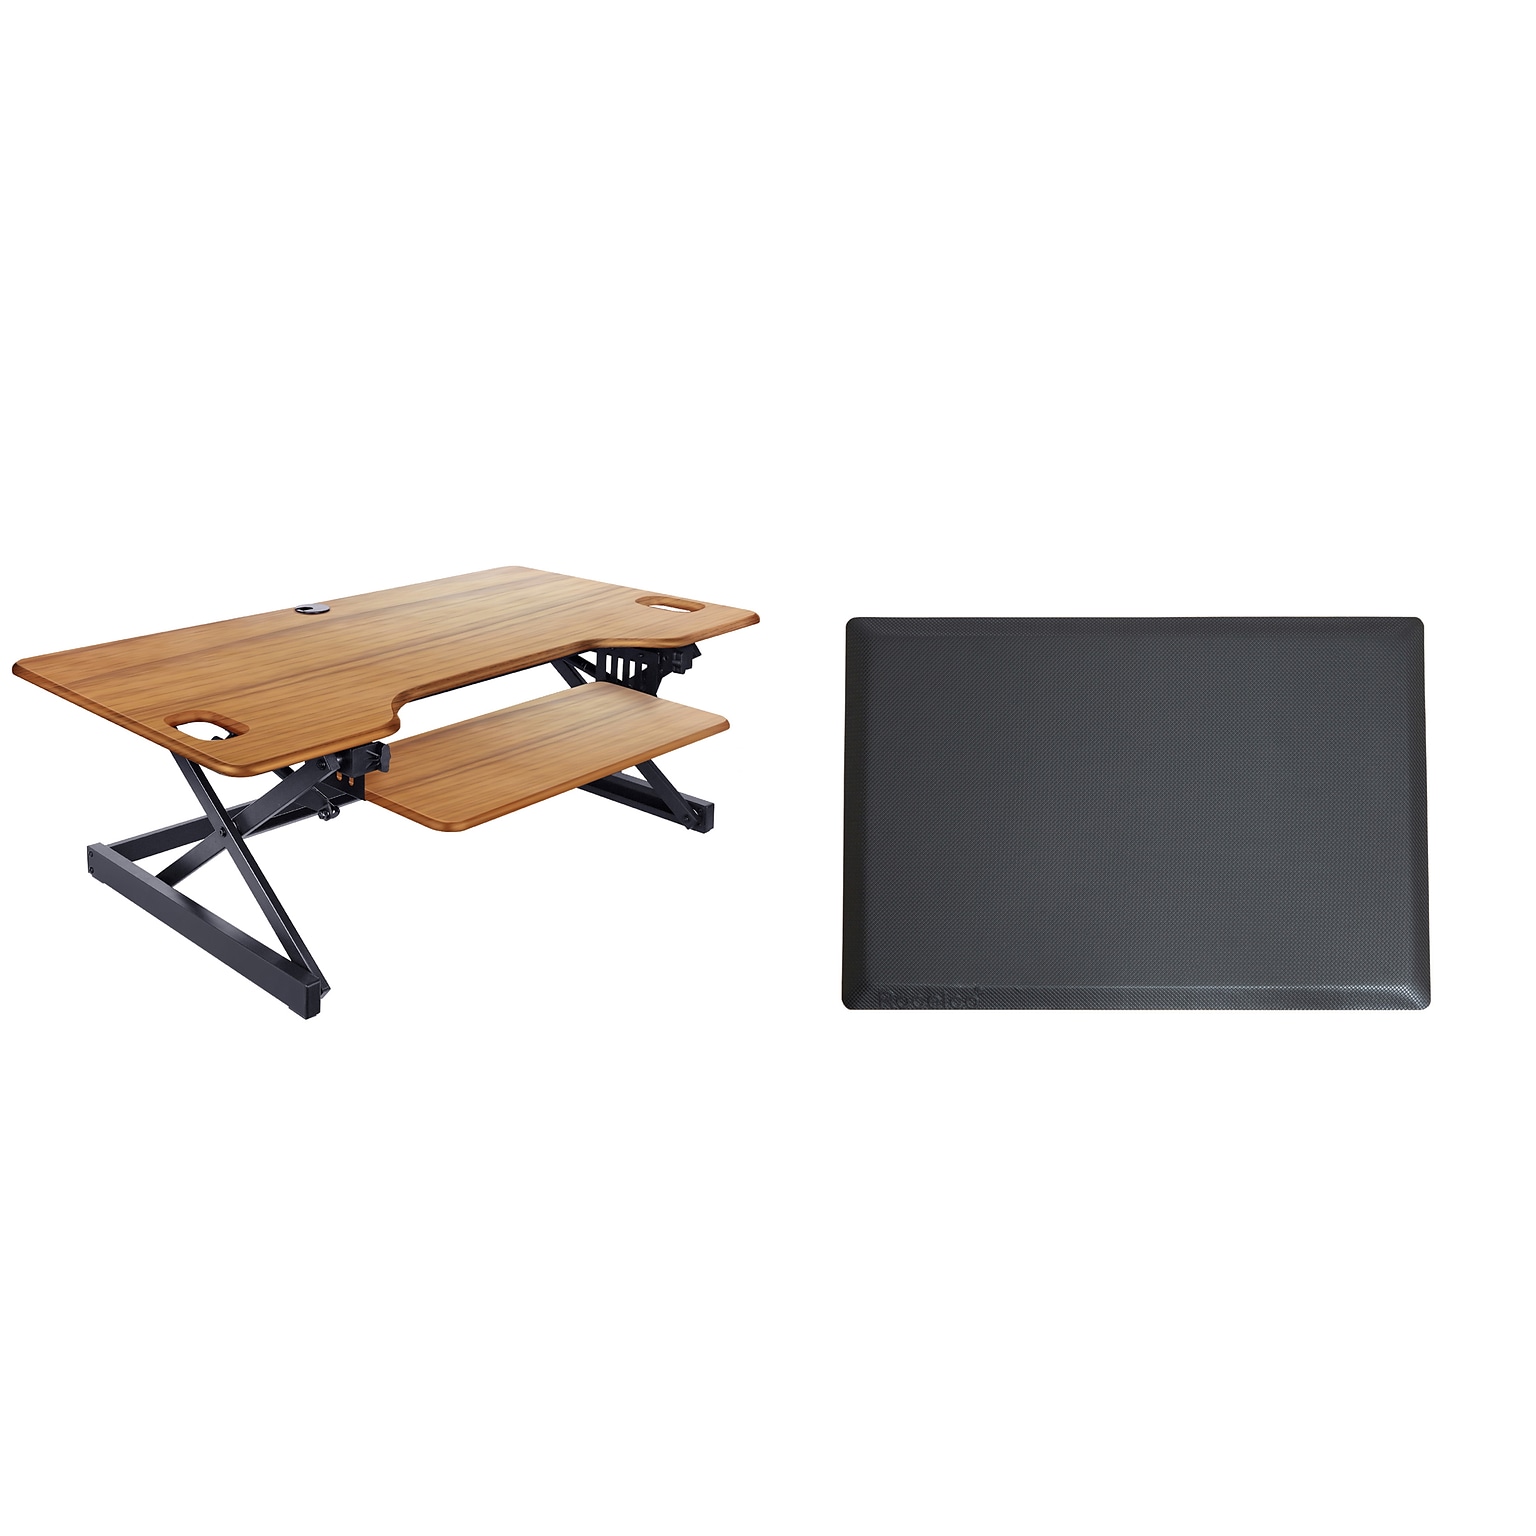 Rocelco 46W 5-20H Adjustable Standing Desk Converter with Anti Fatigue Mat, Teak (R DADRT-46-MAFM)